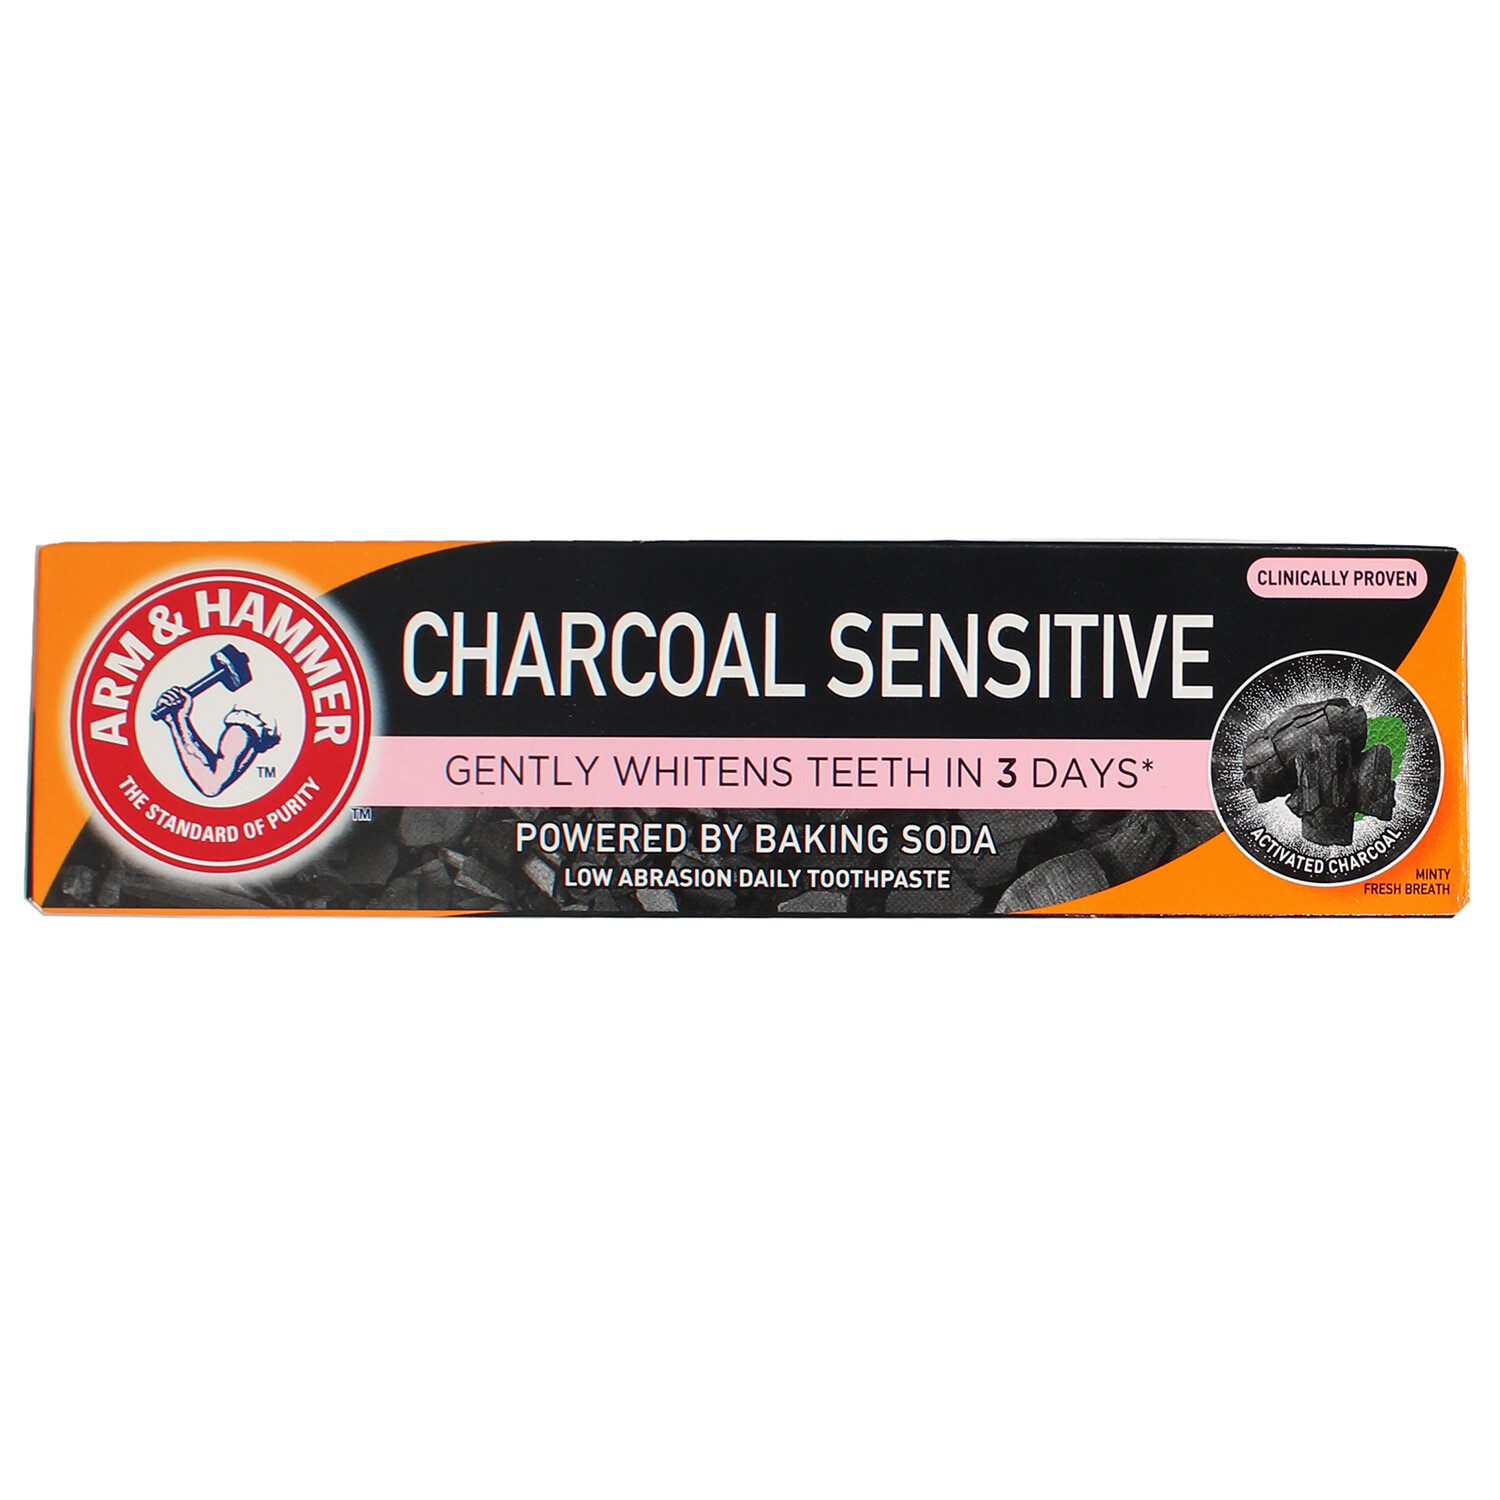 Arm & Hammer Charcoal Sensitive Toothpaste - Black Image